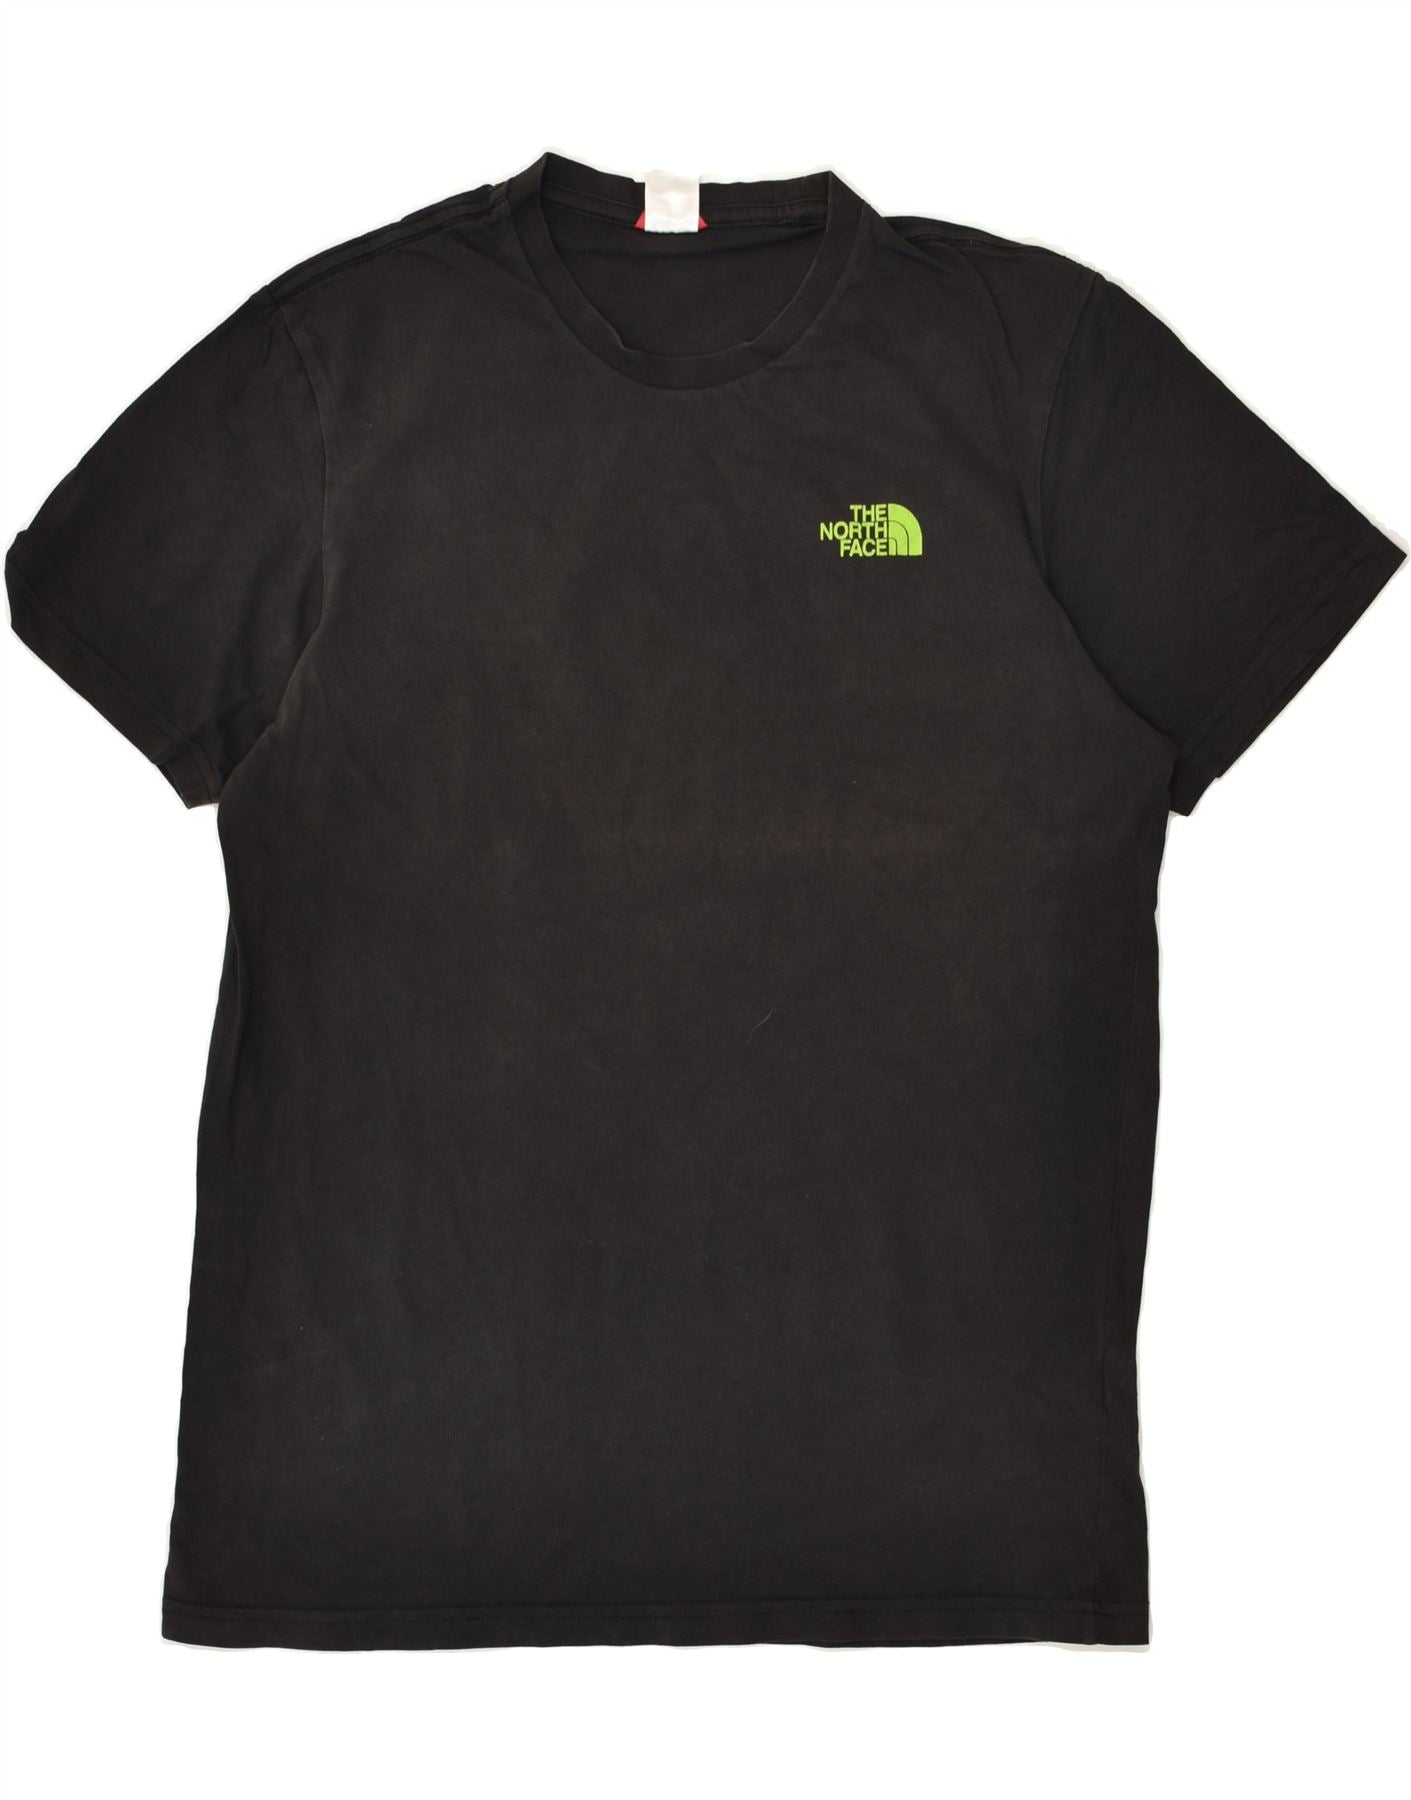 The North Face cotton t-shirt black color